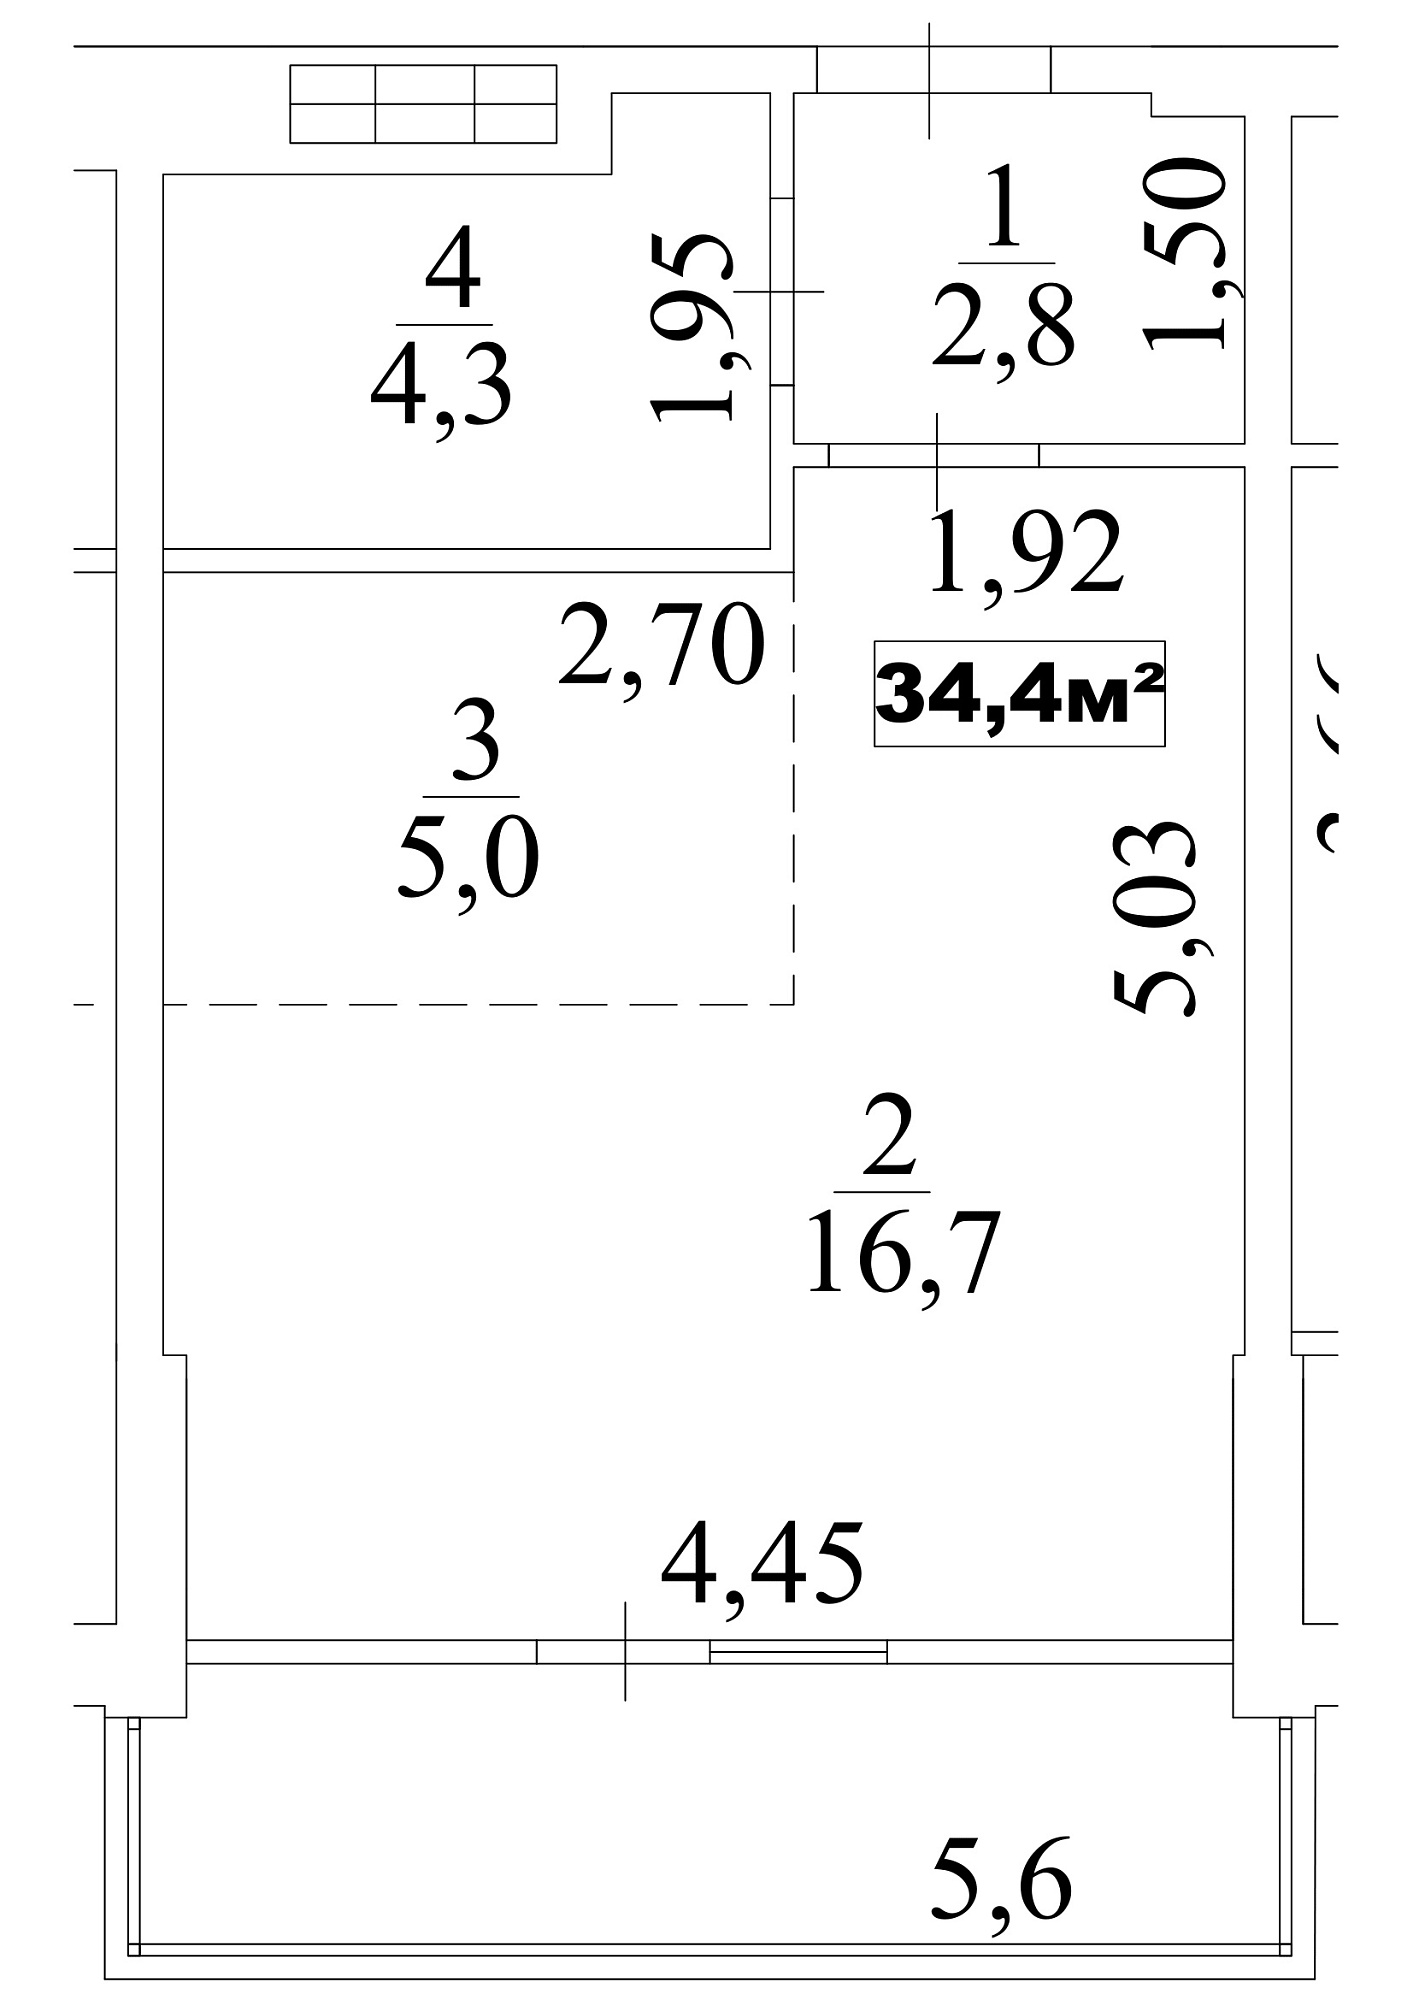 Planning Smart flats area 34.4m2, AB-10-07/0055б.